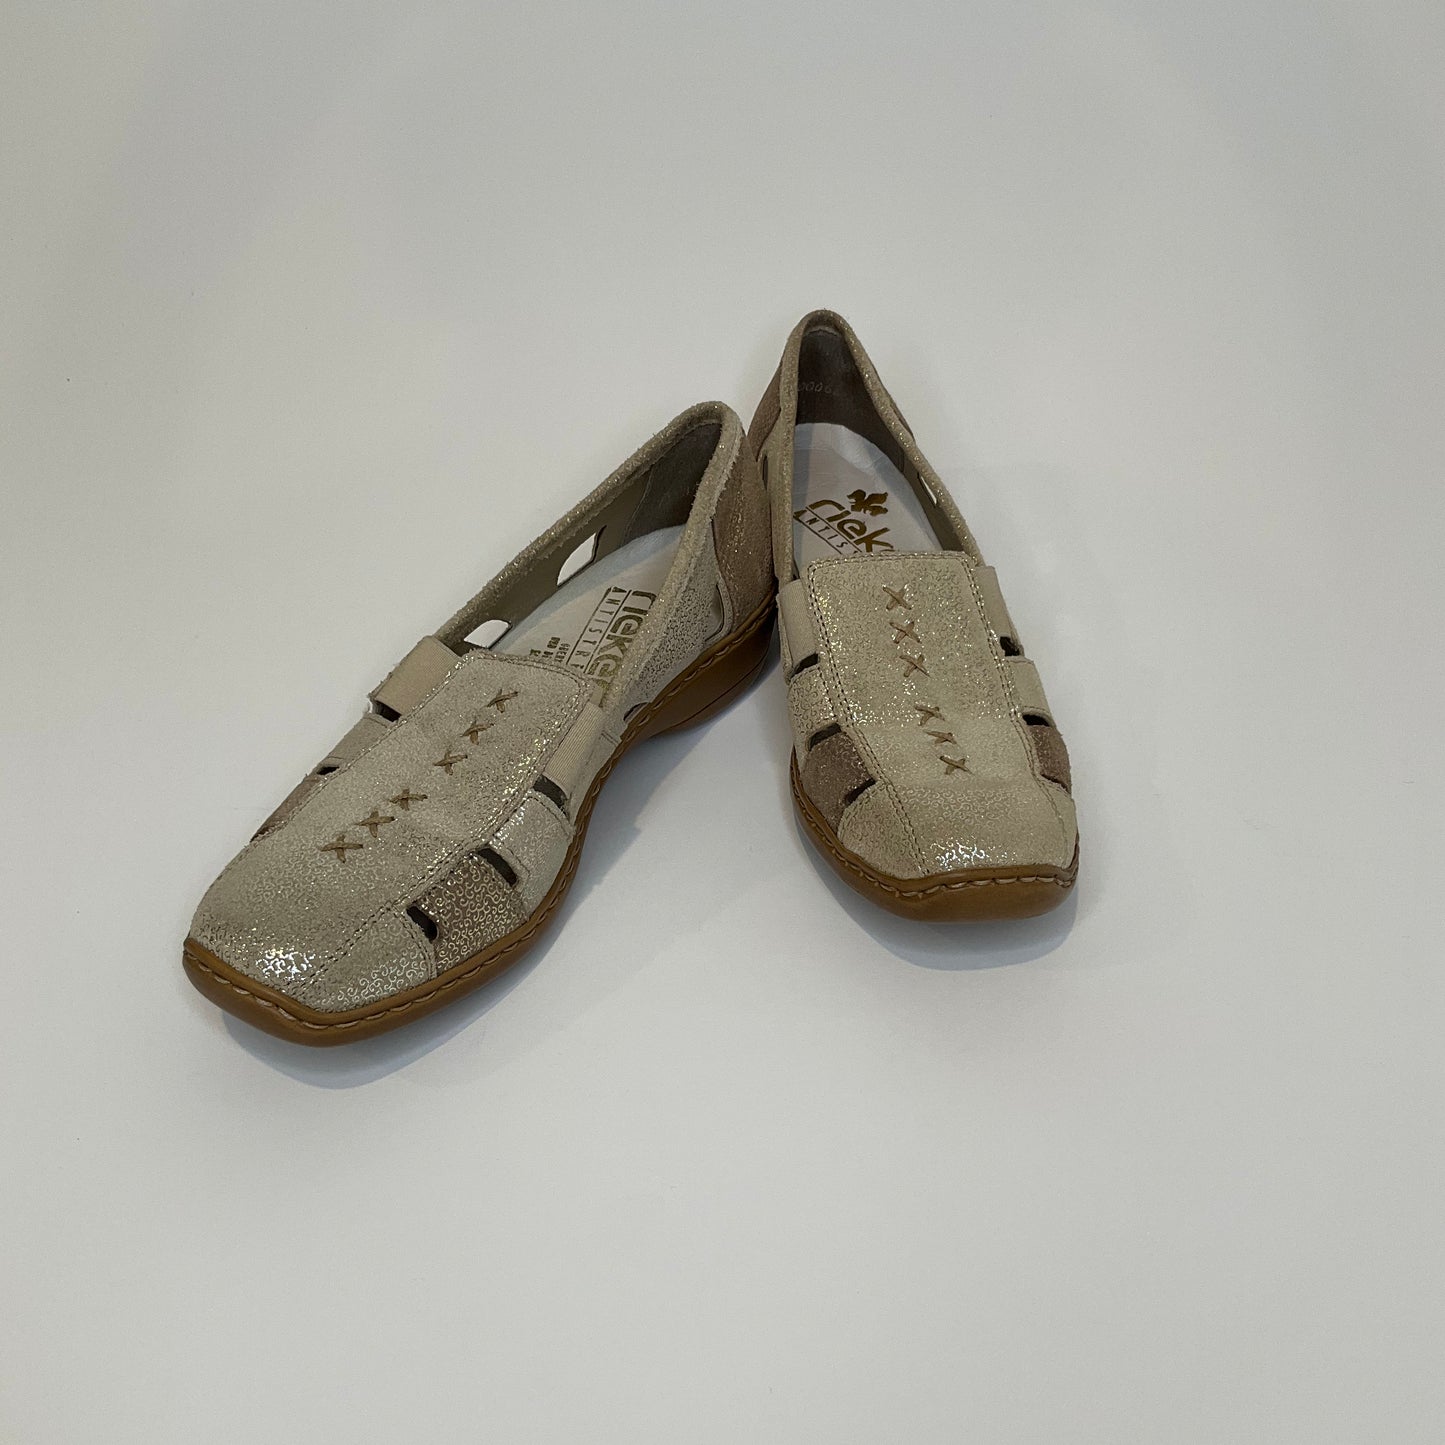 Rieker - Sandals - Size 37